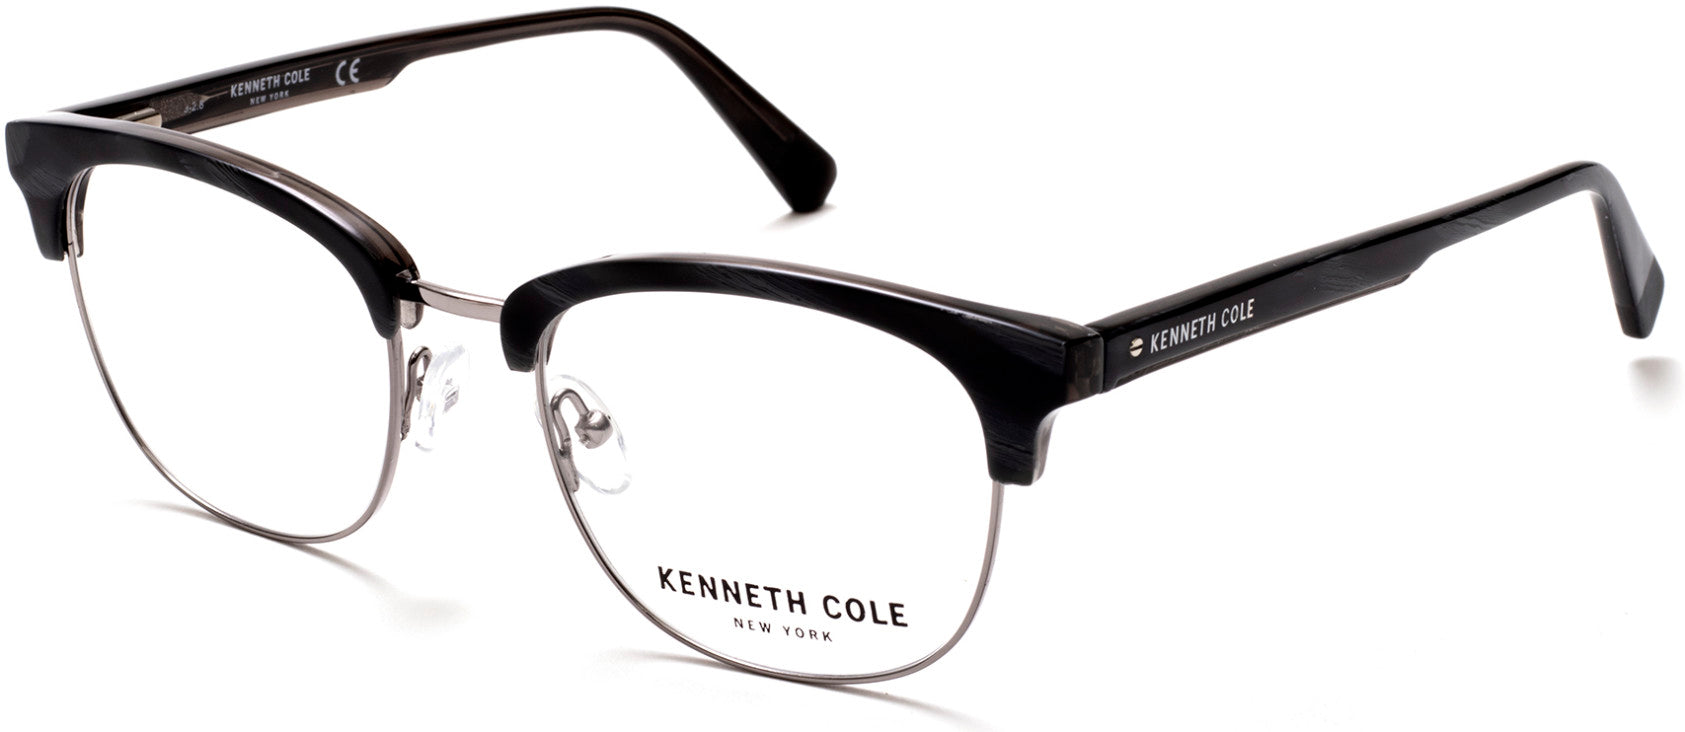 Kenneth Cole New York,Kenneth Cole Reaction KC0292 Geometric Eyeglasses 020-020 - Grey